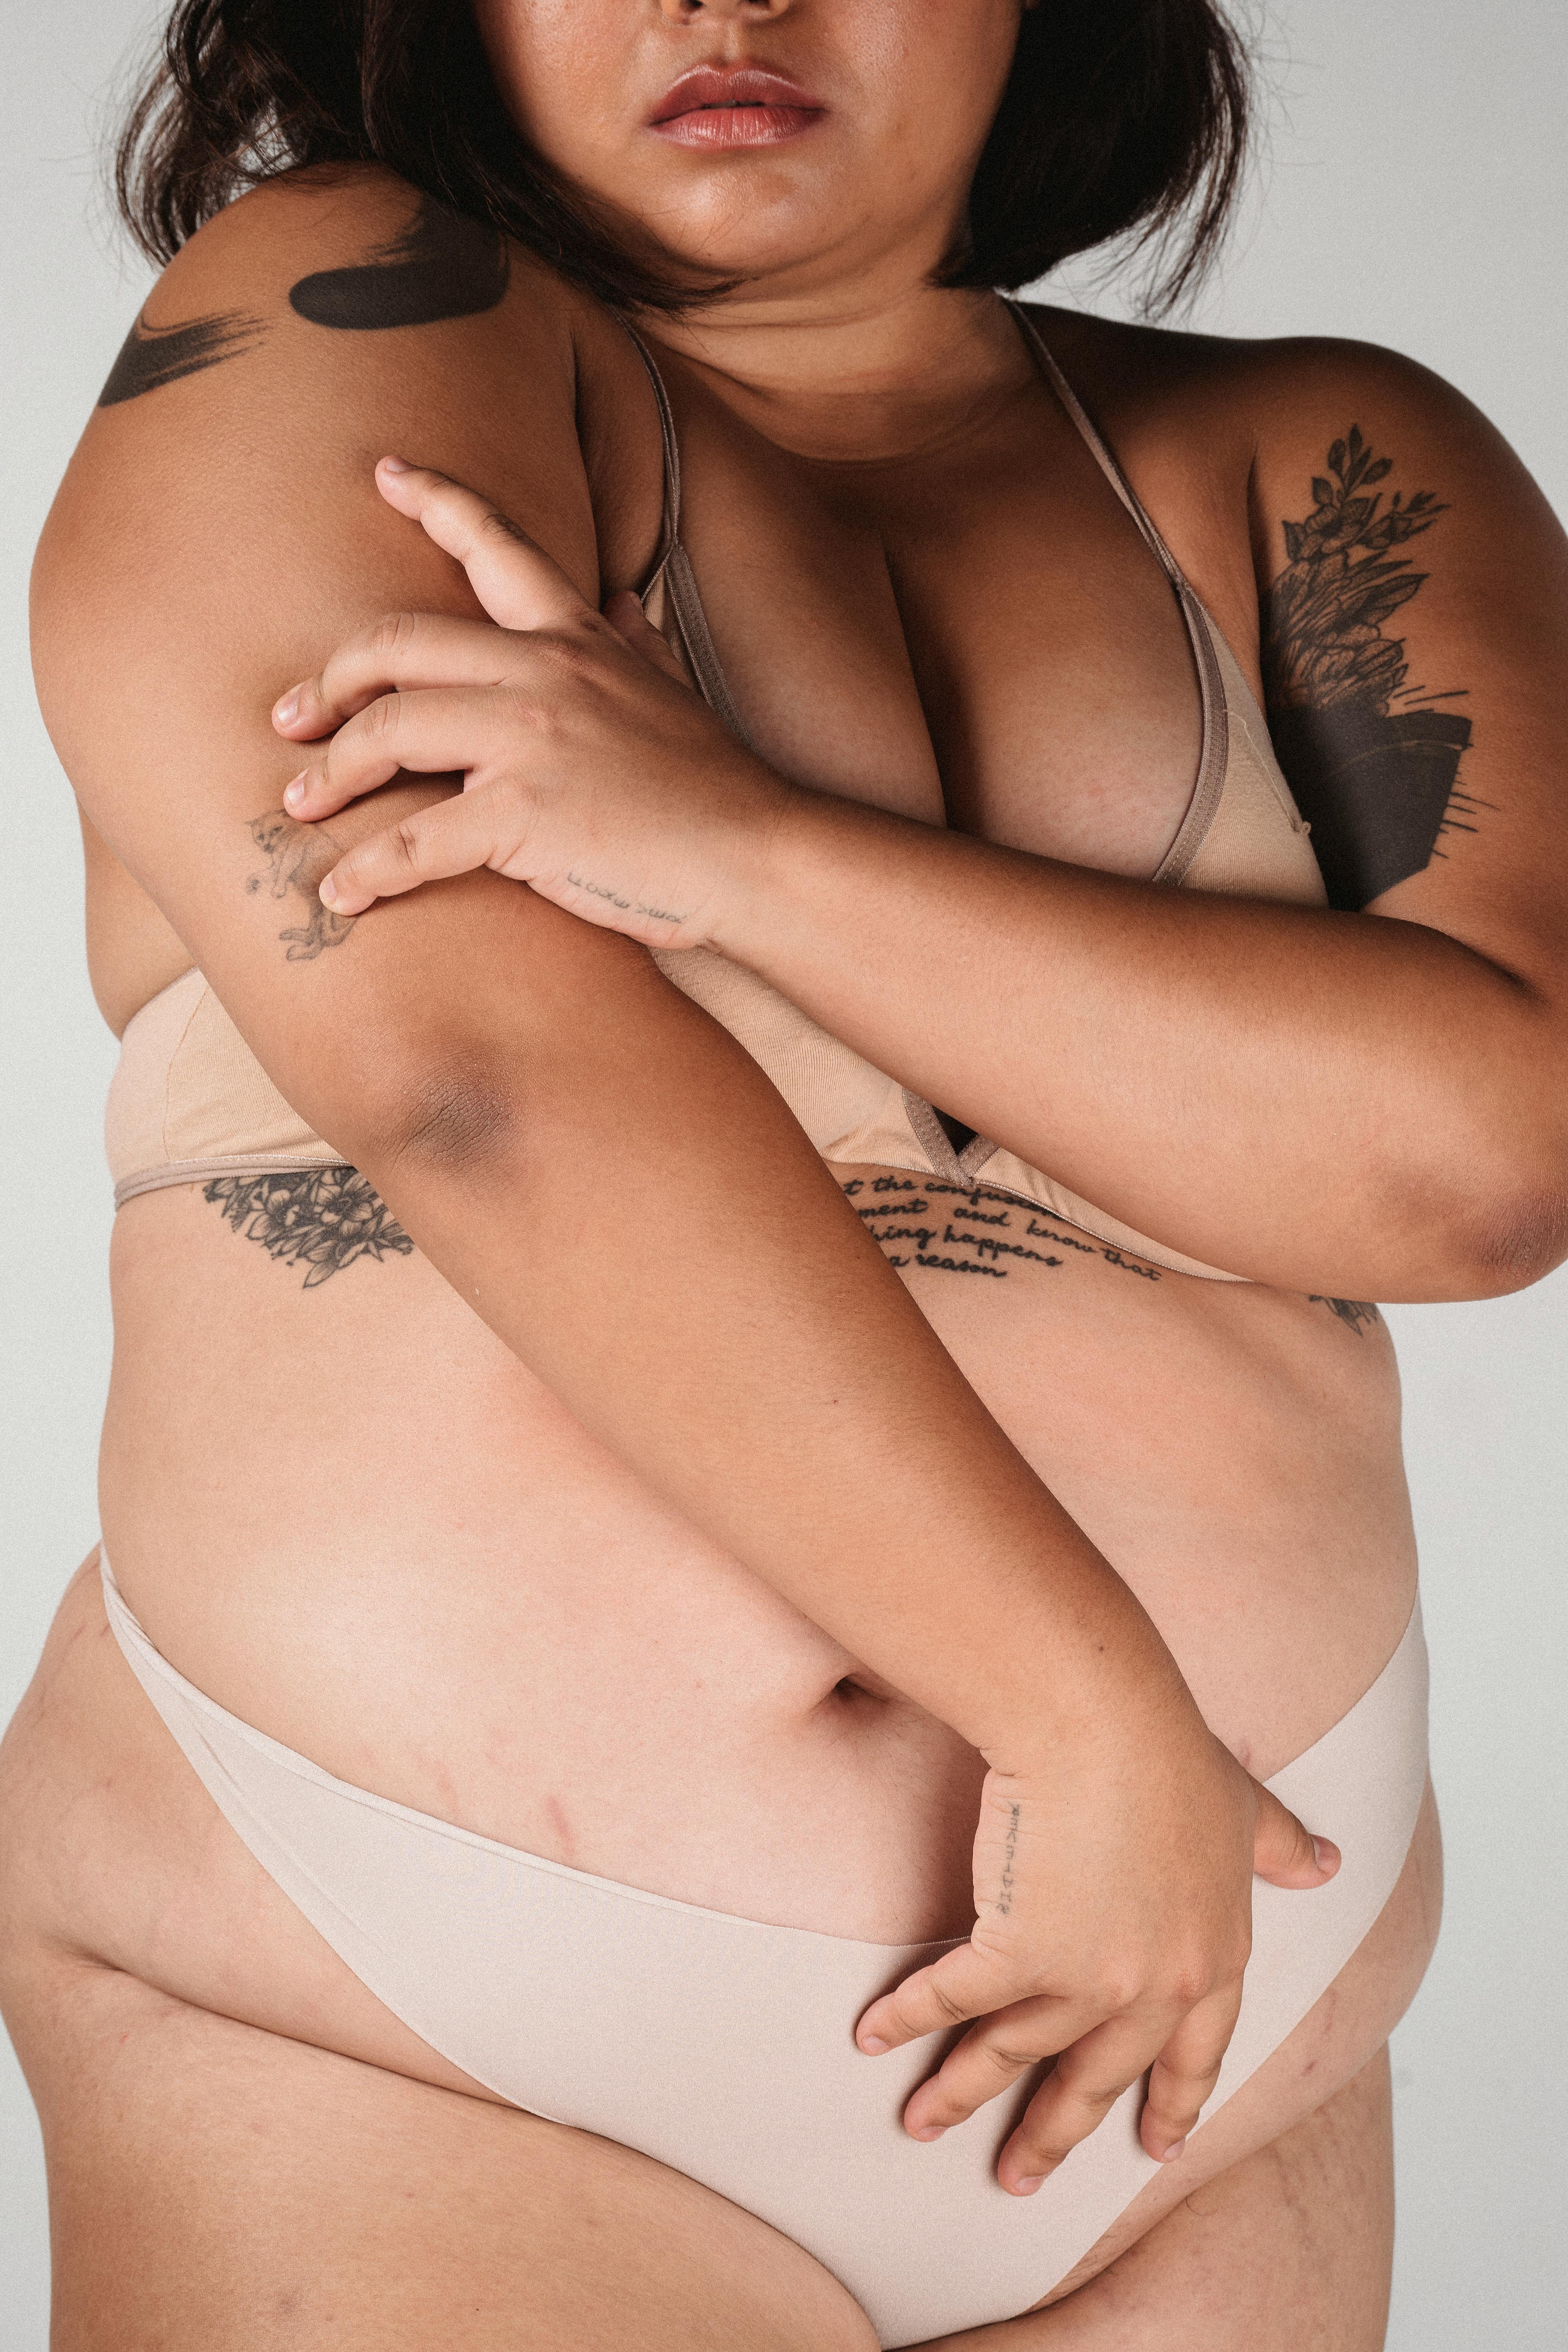 Sensual ethnic naked plus size female covering body Â· Free Stock Photo